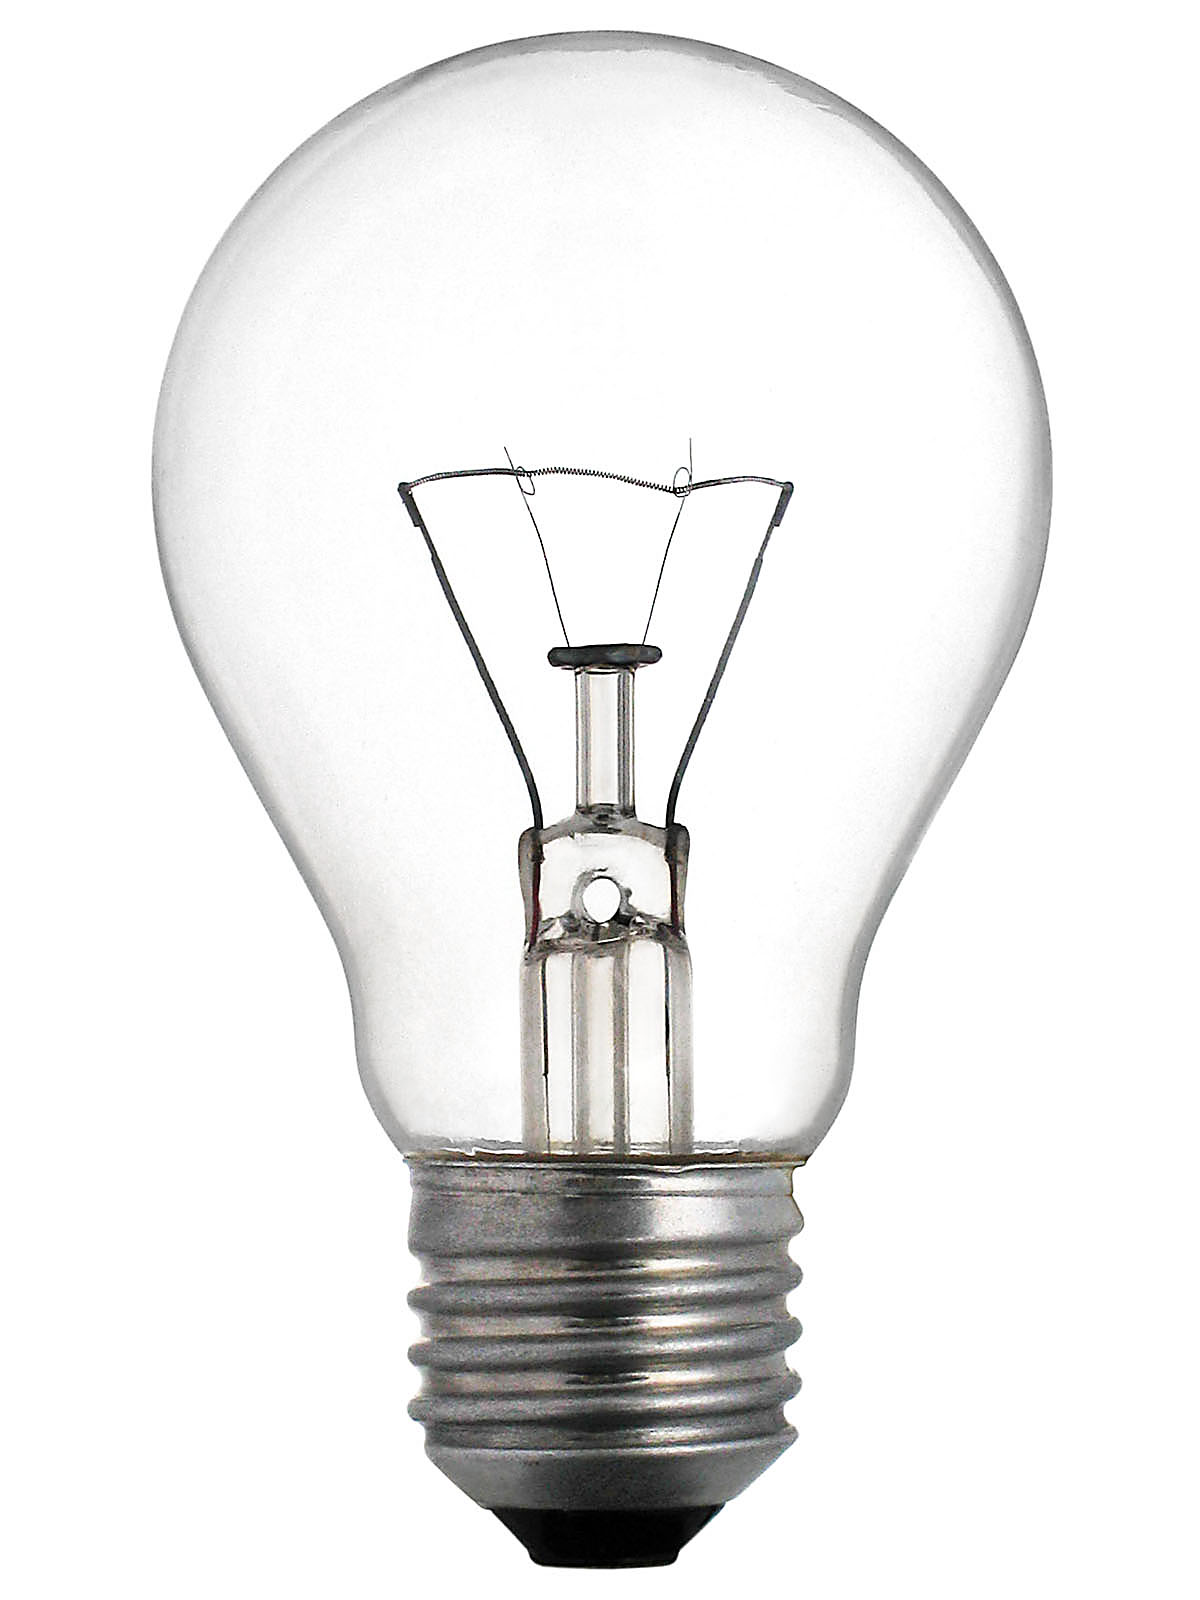 ANDROOPALOOZA: How Does a Homeschooler Change a Lightbulb?